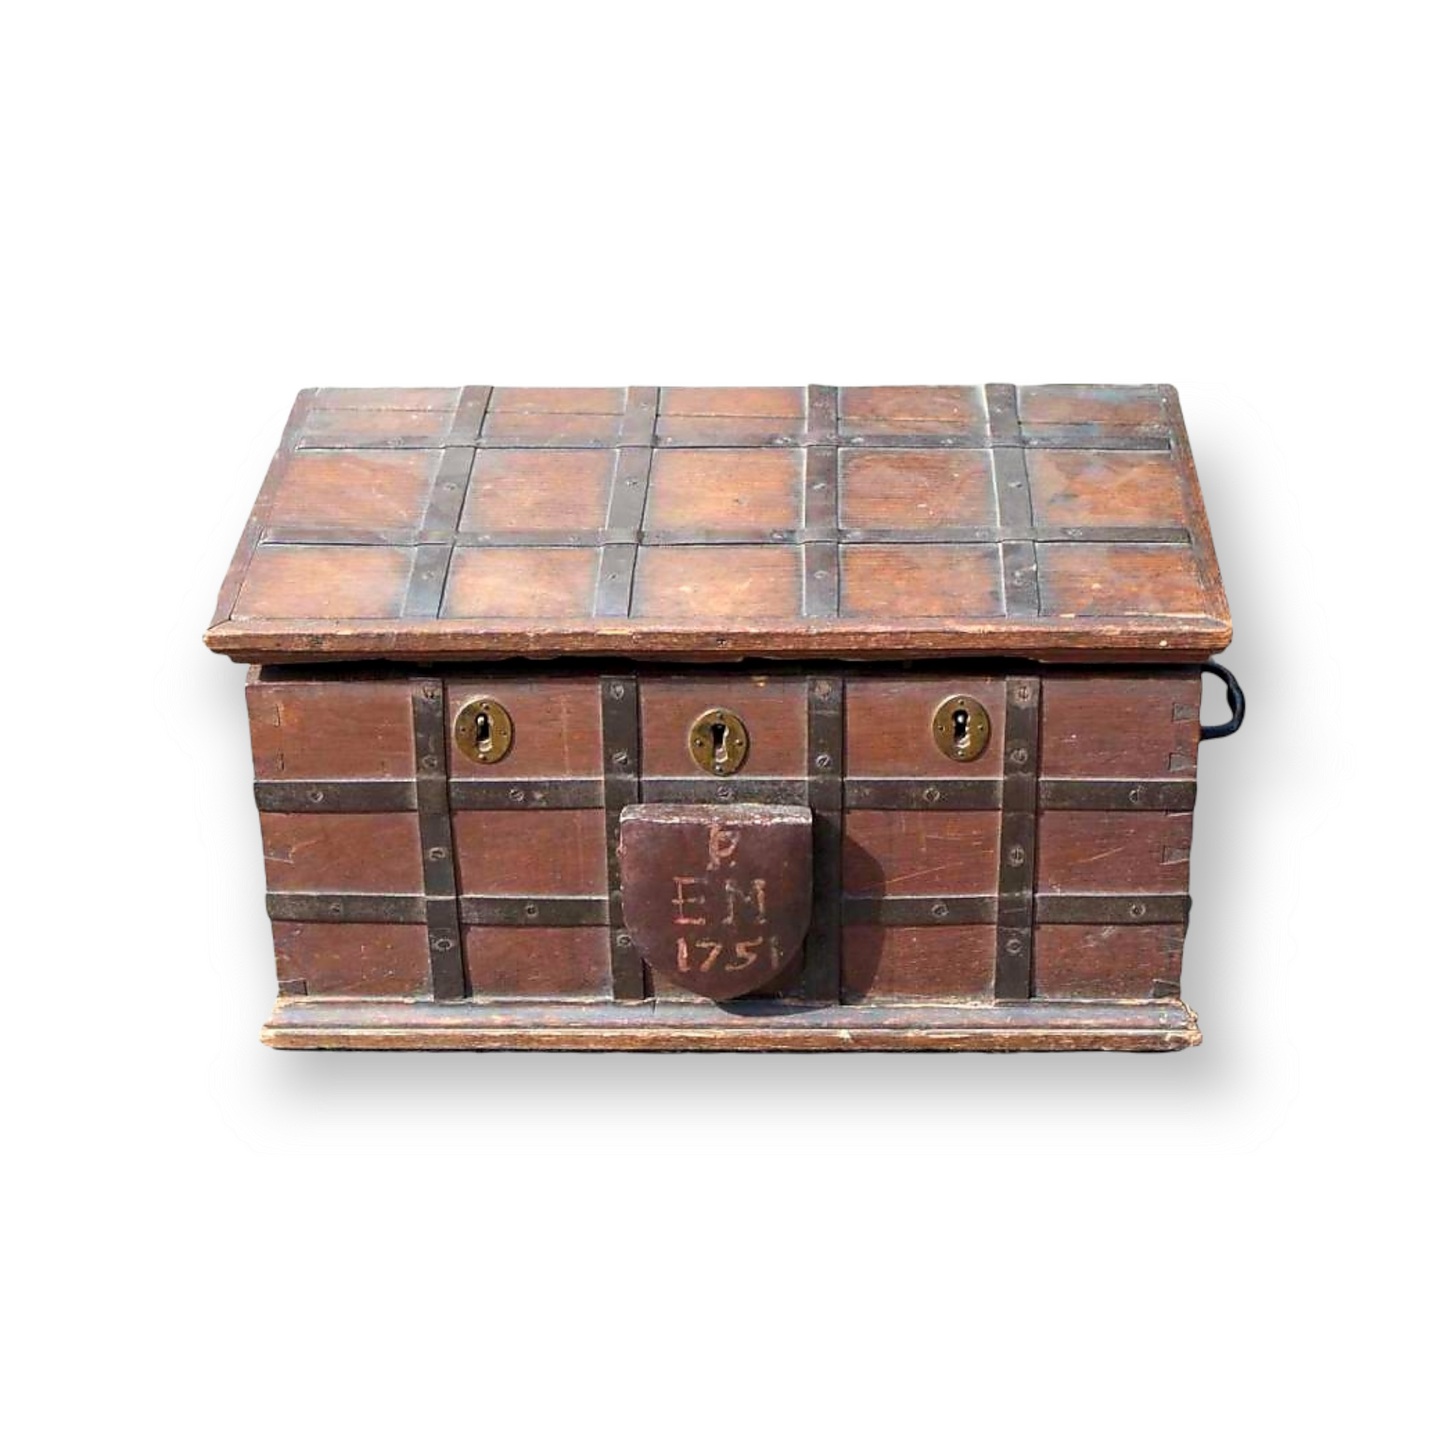 Mid 18th Century English Antique Oak Iron Bound Box Strongbox, Bearing Initials "EM" & Dated "1751"